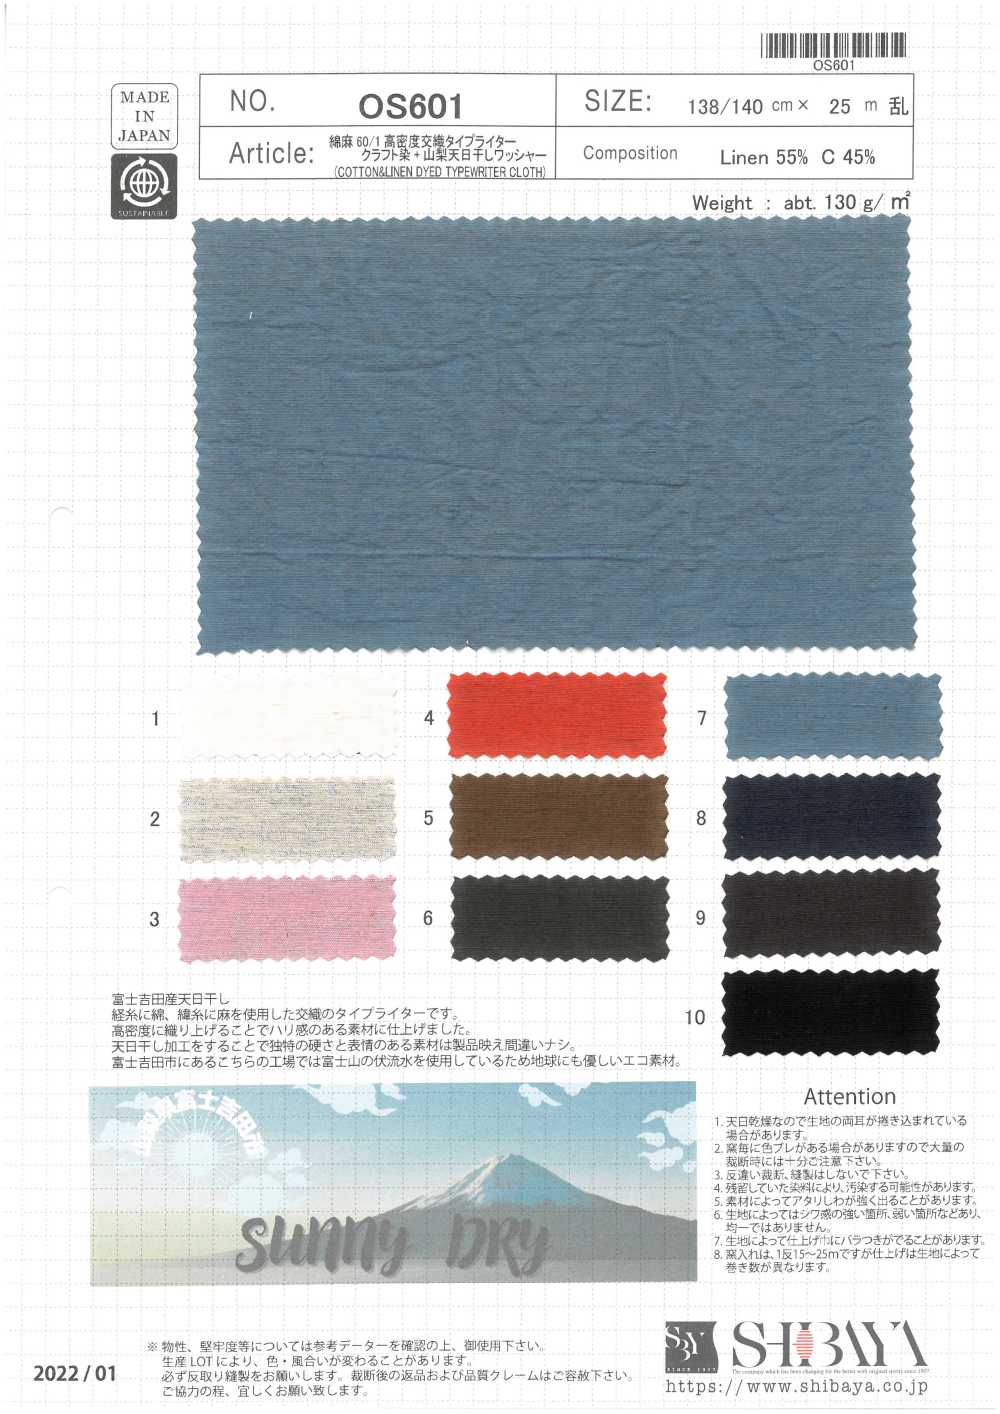 OS601 Baumwoll-Leinen 60/1 High Density Mixed Weave Schreibmaschinentuch Craft Dyed Sun Drying Washer Proc[Textilgewebe] SHIBAYA